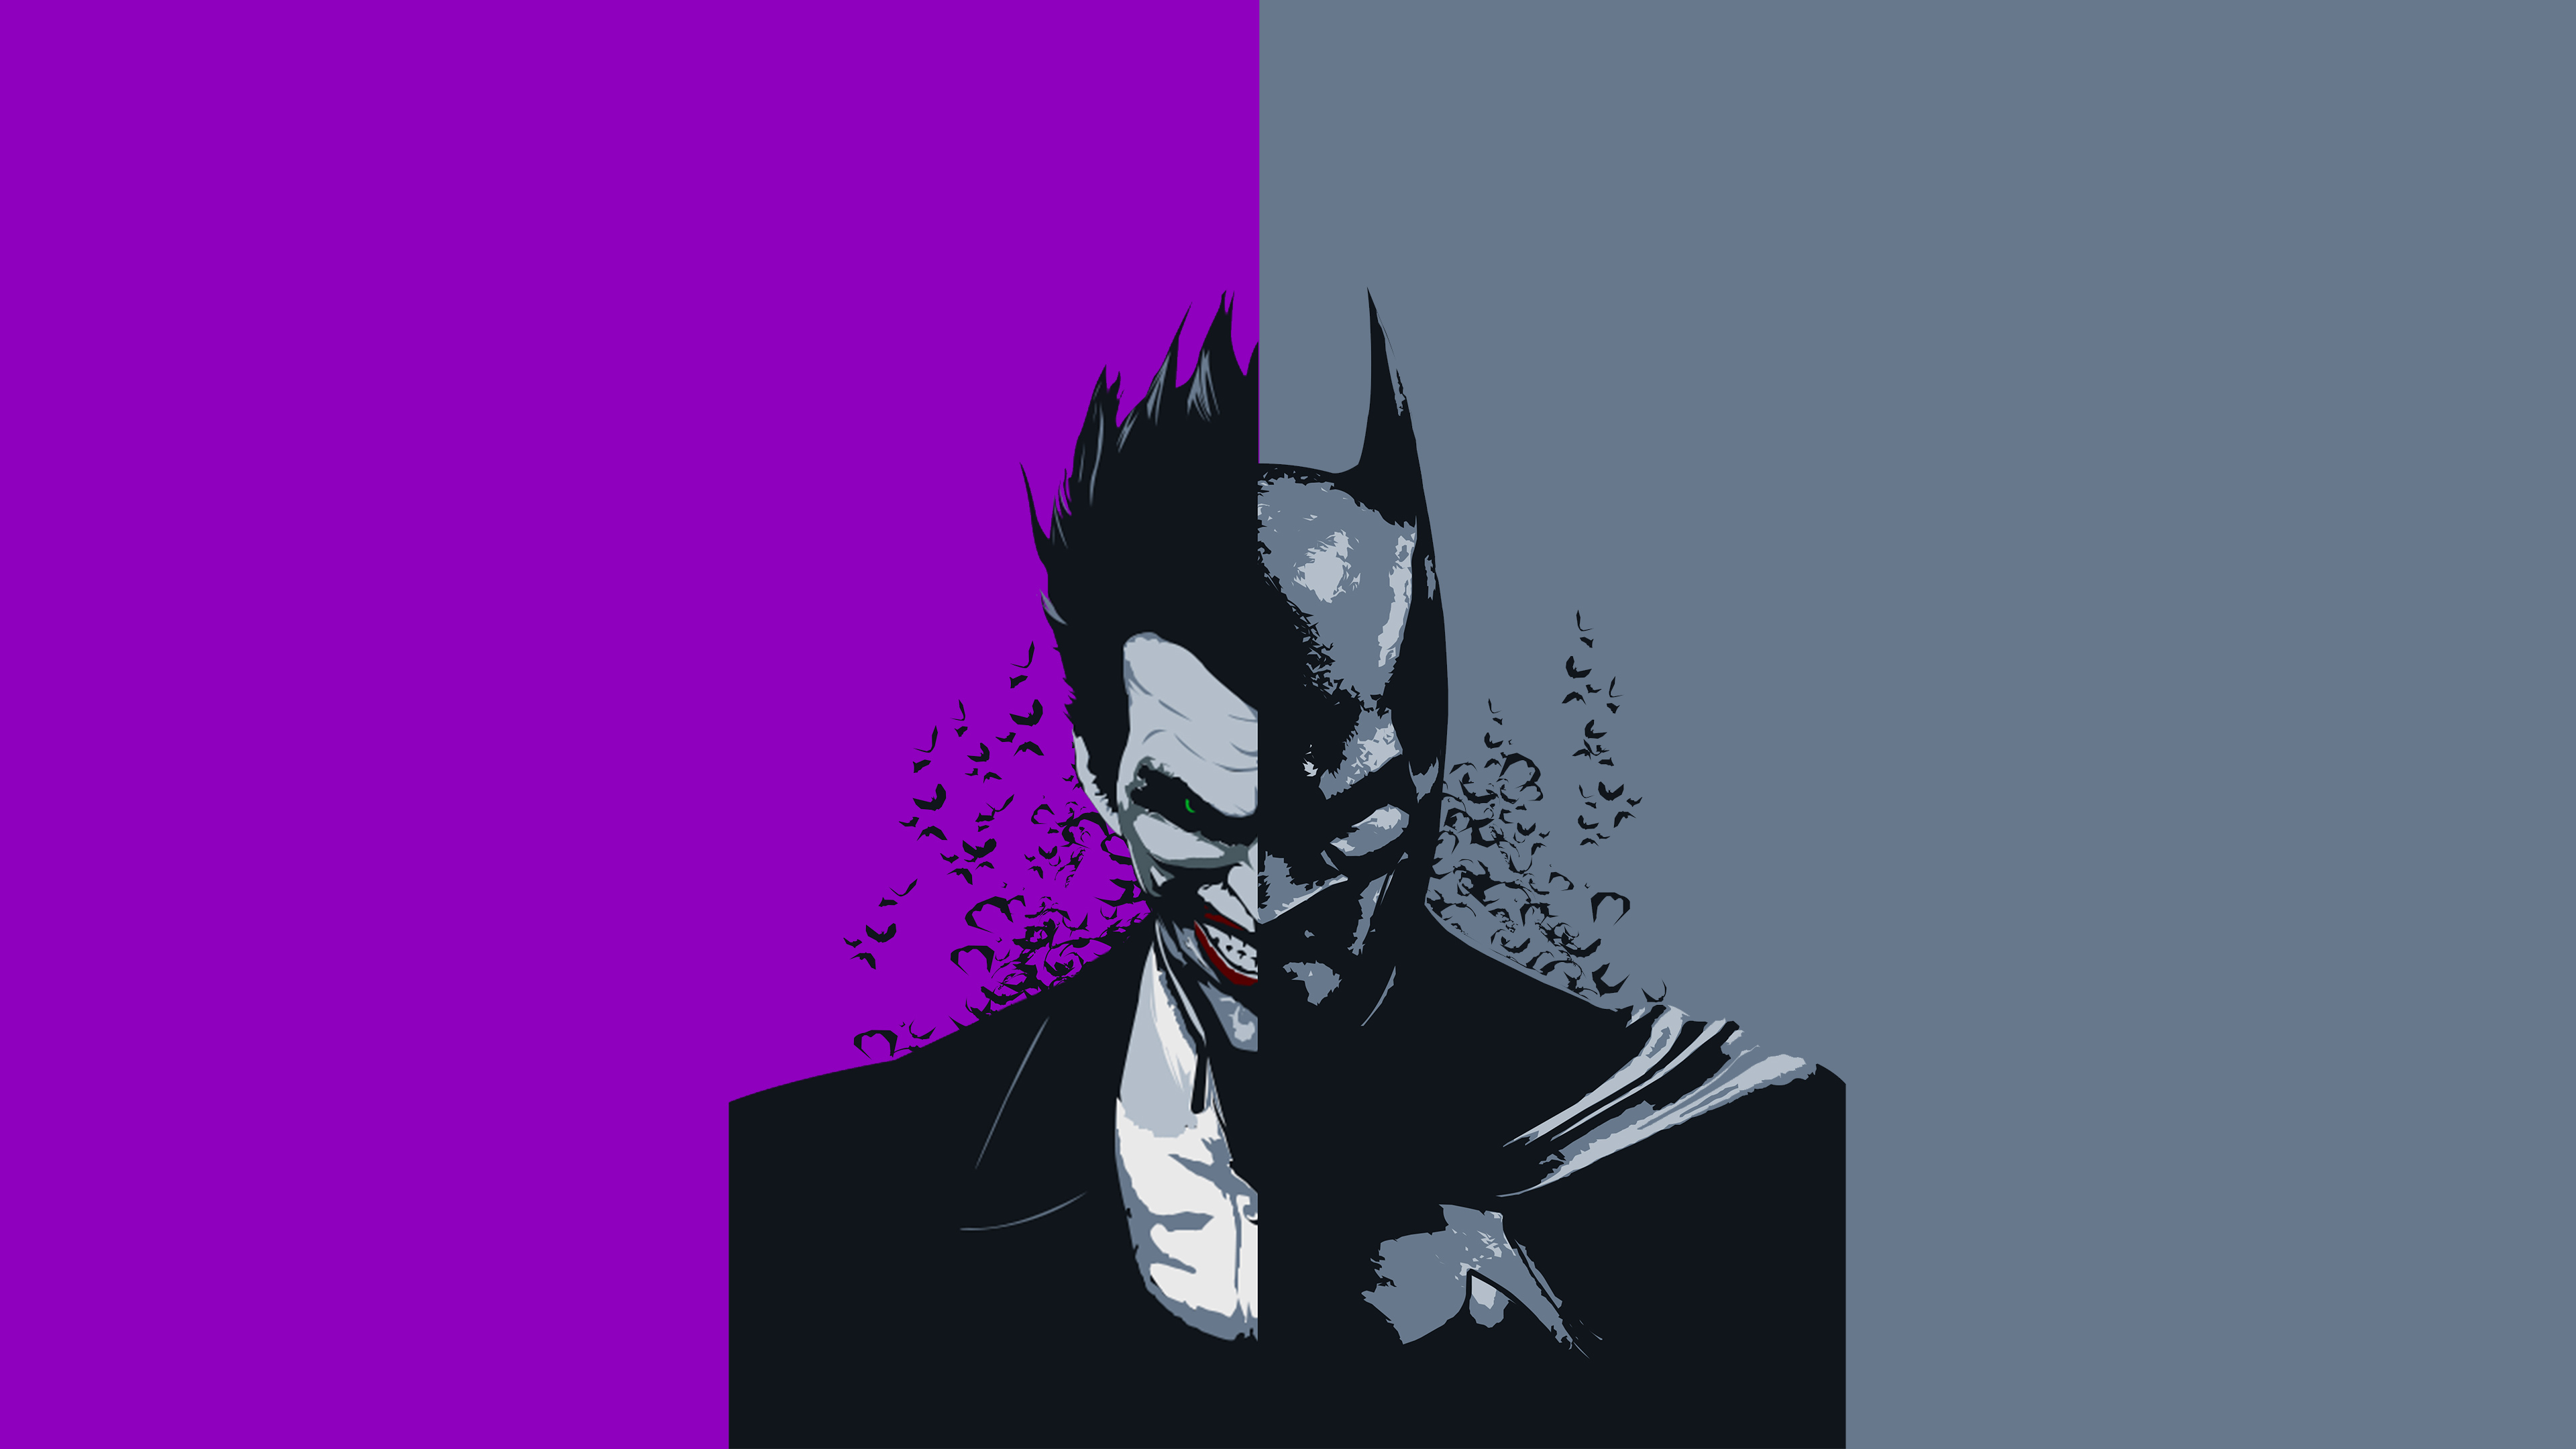 4K Batman and Joker Minimalist Wallpaper, HD Superheroes 4K Wallpapers,  Images, Photos and Background - Wallpapers Den